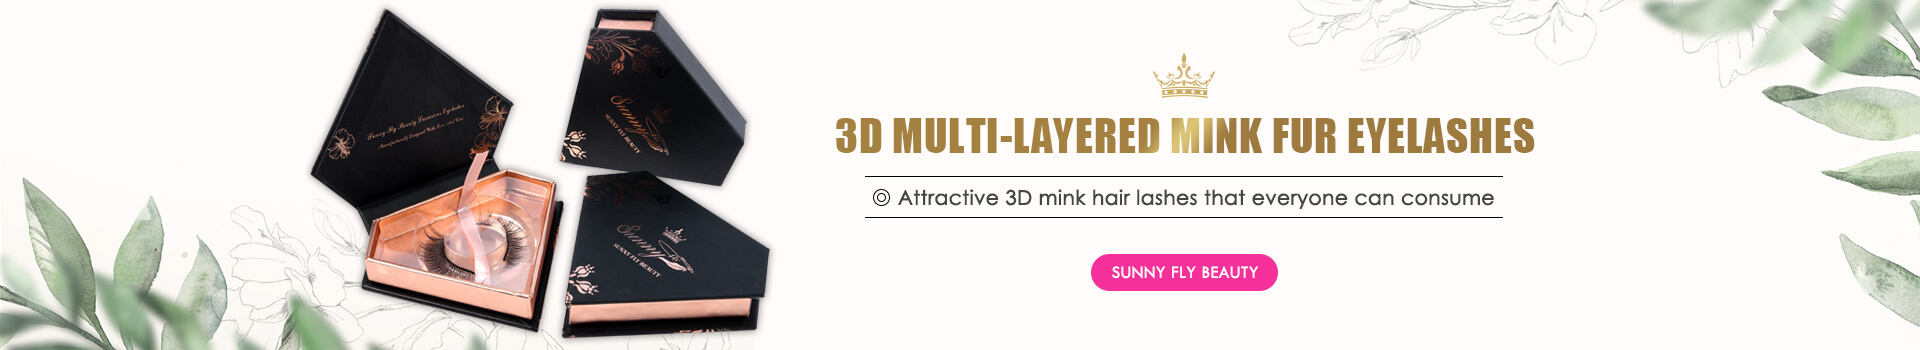 3D Multi-layered Mink Fur Eyelashes MG72